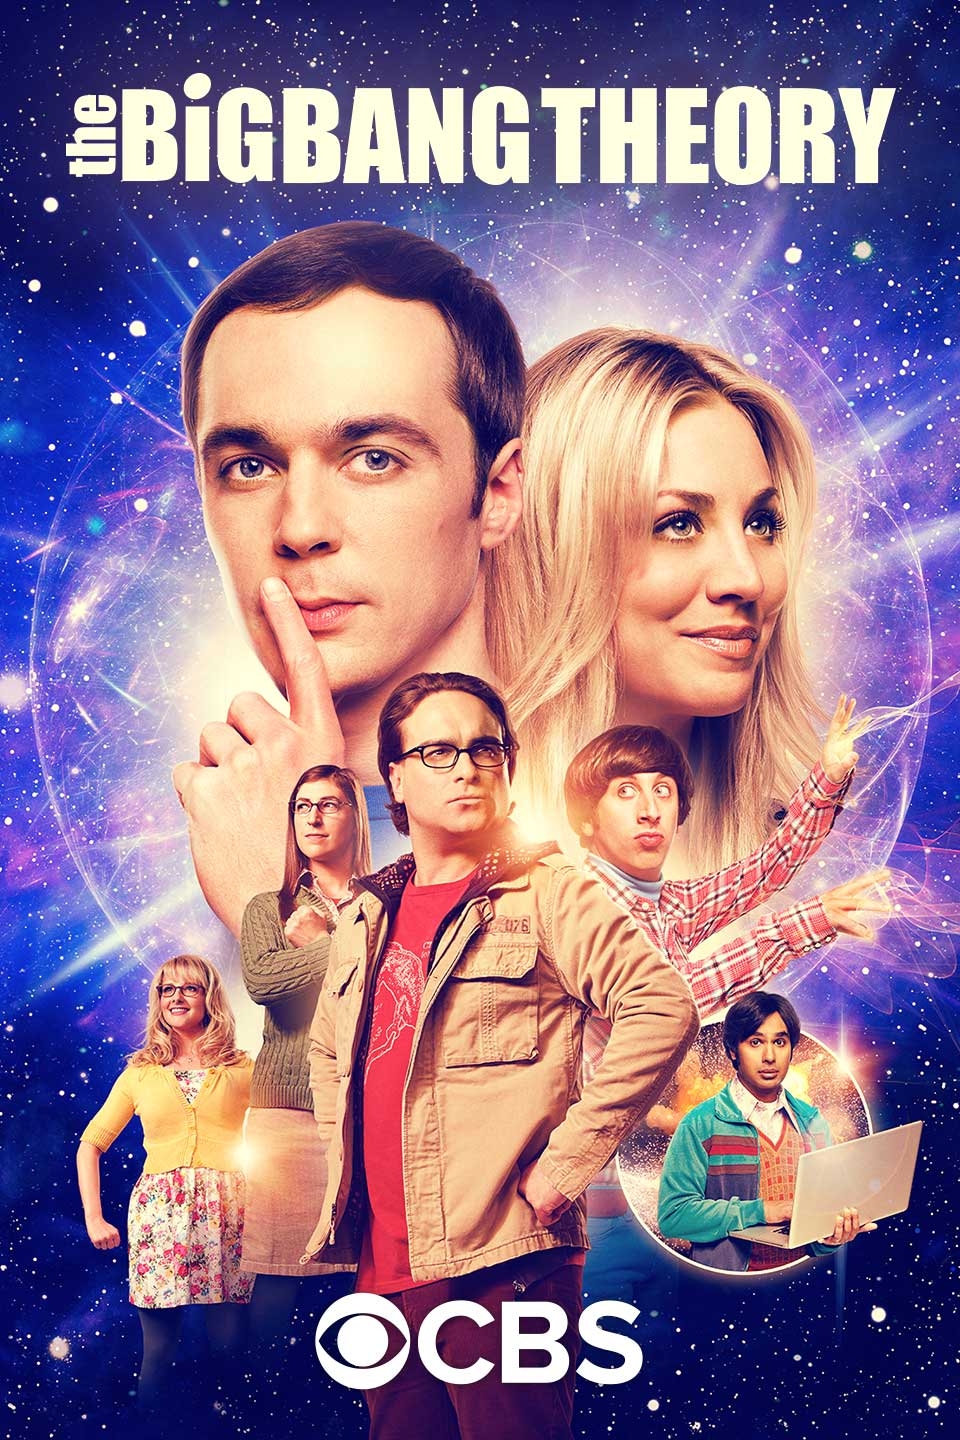 The Big Bang Theory Theme Song, PDF, Big Bang